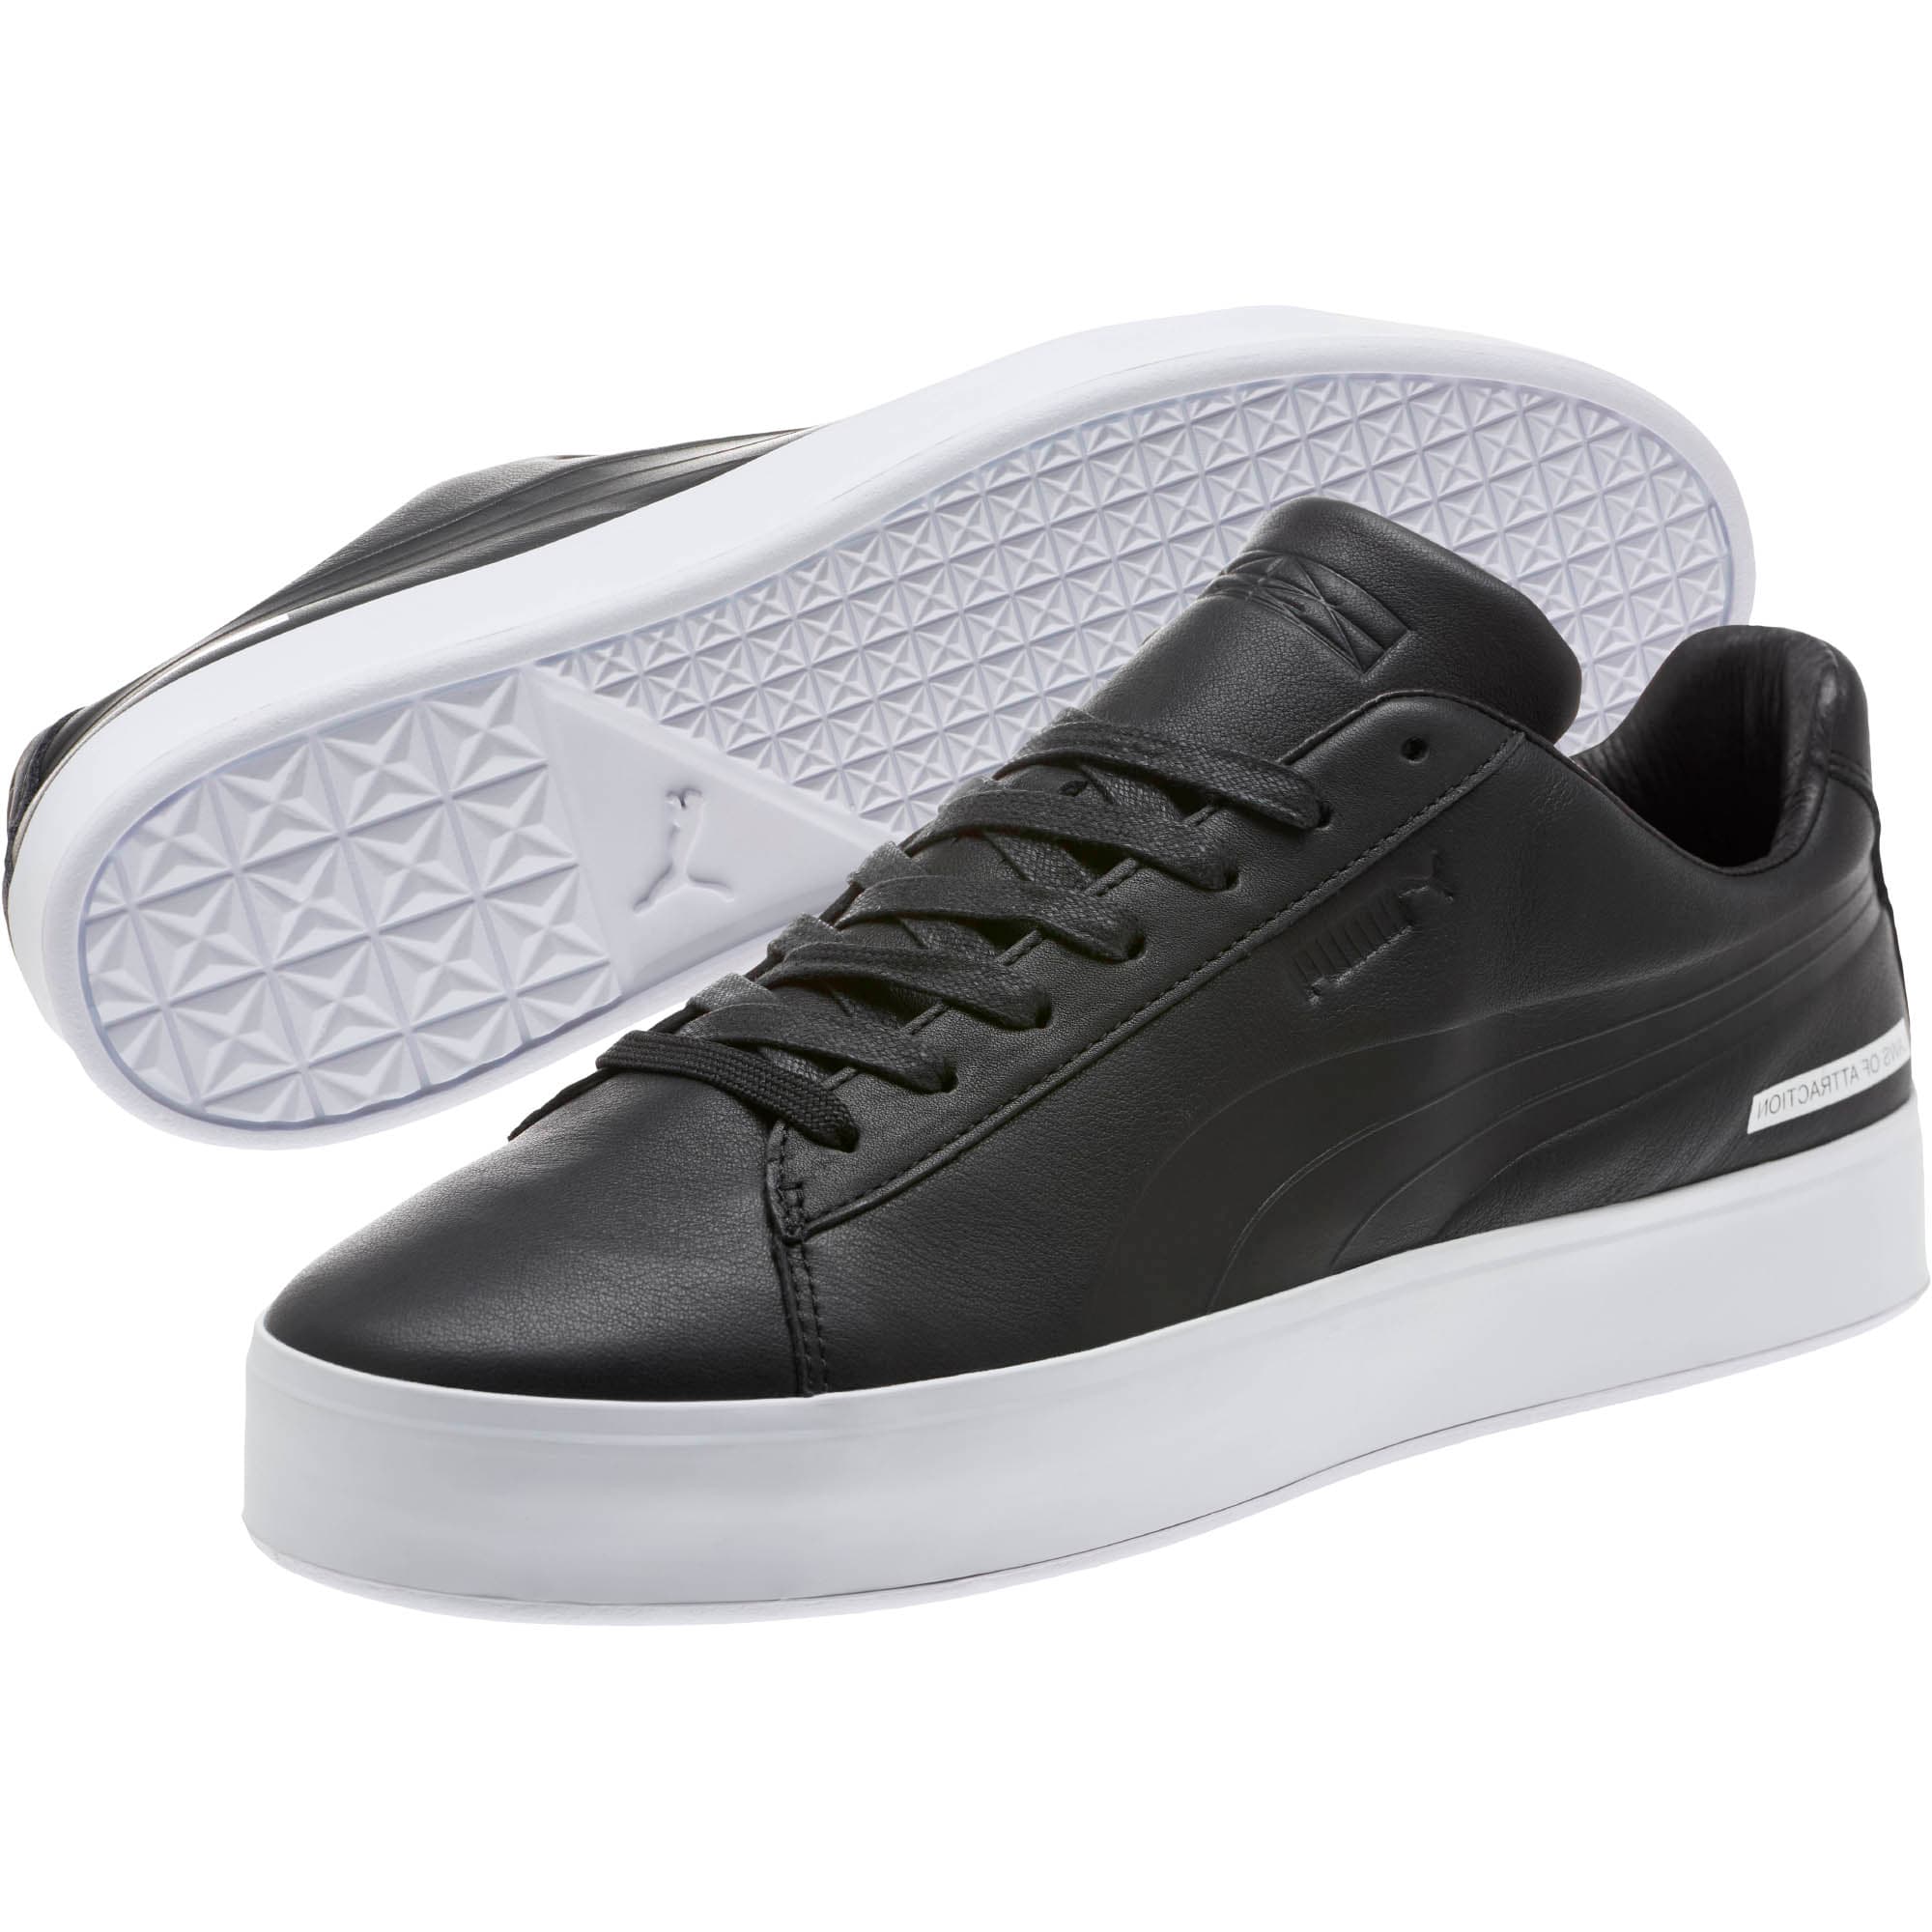 puma white and black platform sneakers